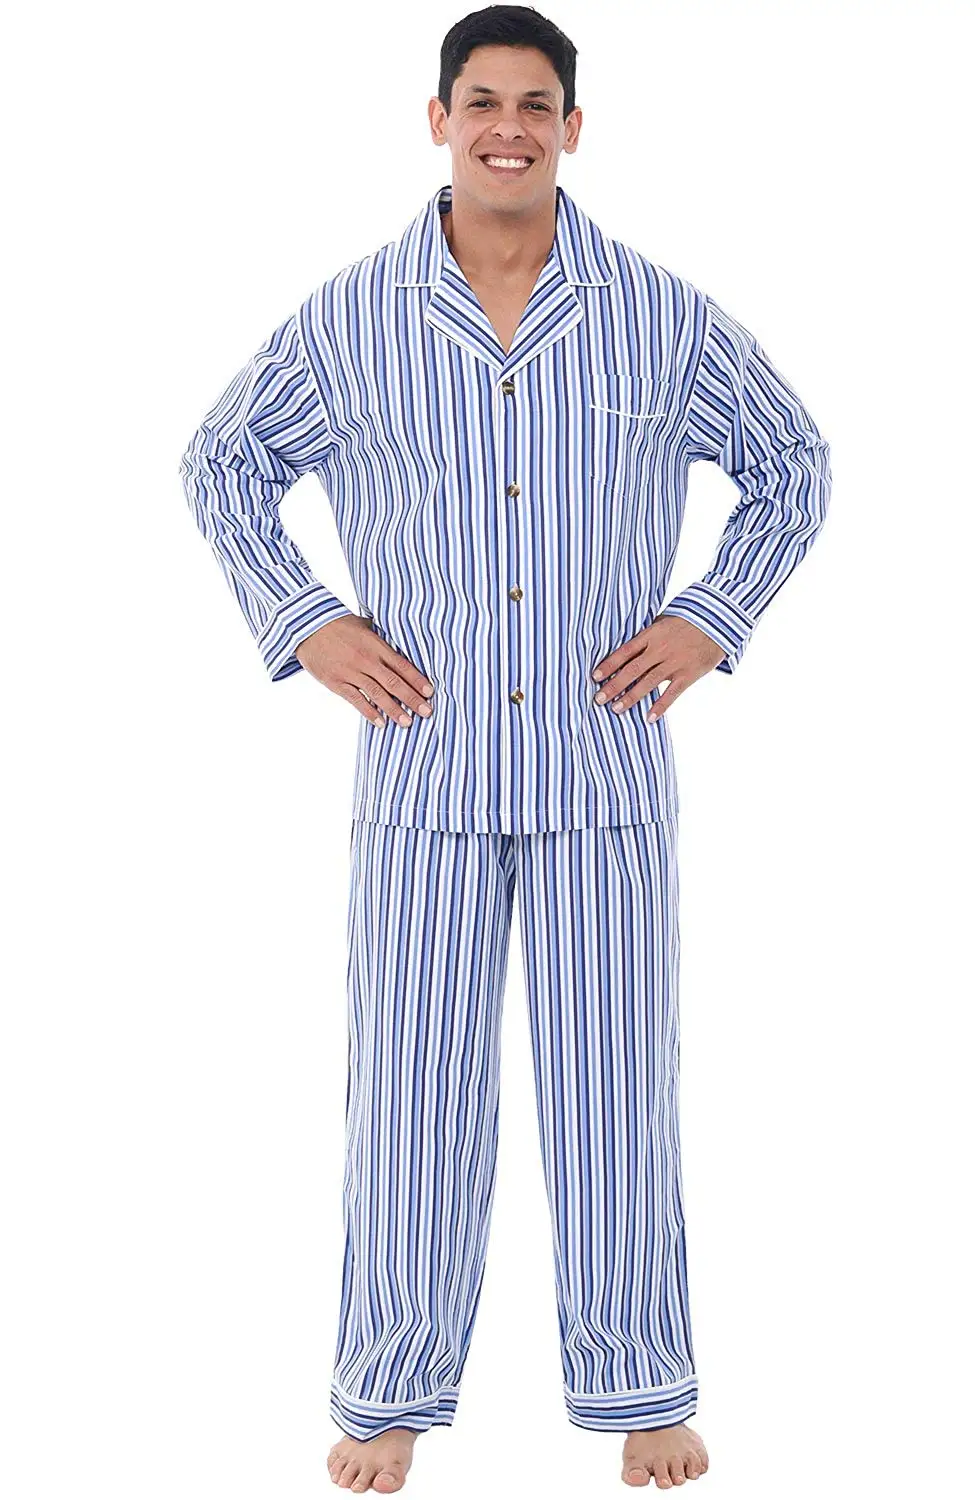 Больничная пижама. Alexander del Rossa пижама. Пижама армейская Госпитальная. Полосатая пижама мужская. Пижама в полоску.